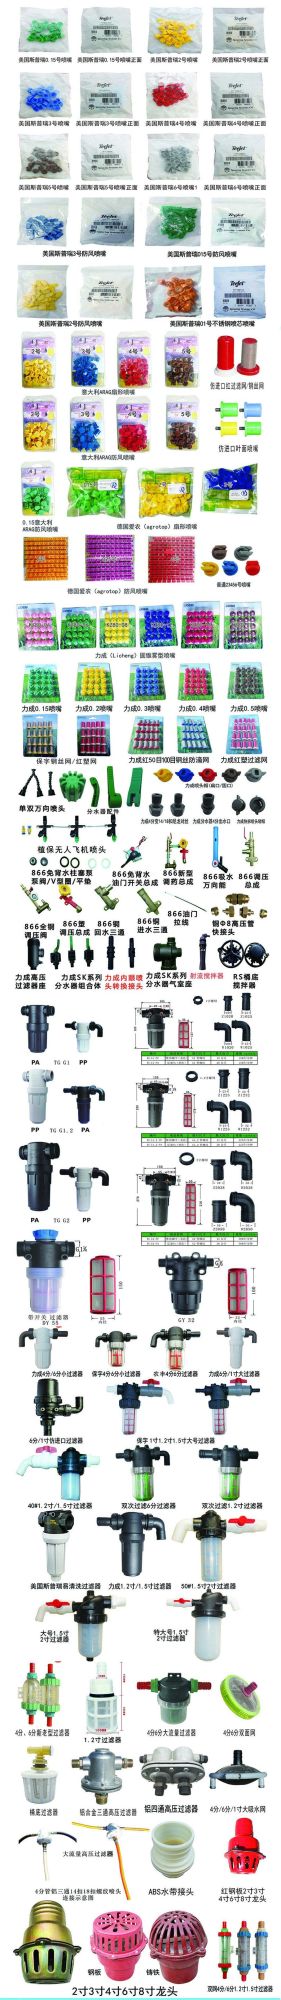 Pressure Sprayer Parts Motorized Jacto Rain Gun Solo 423 Mist Blower Spare Part